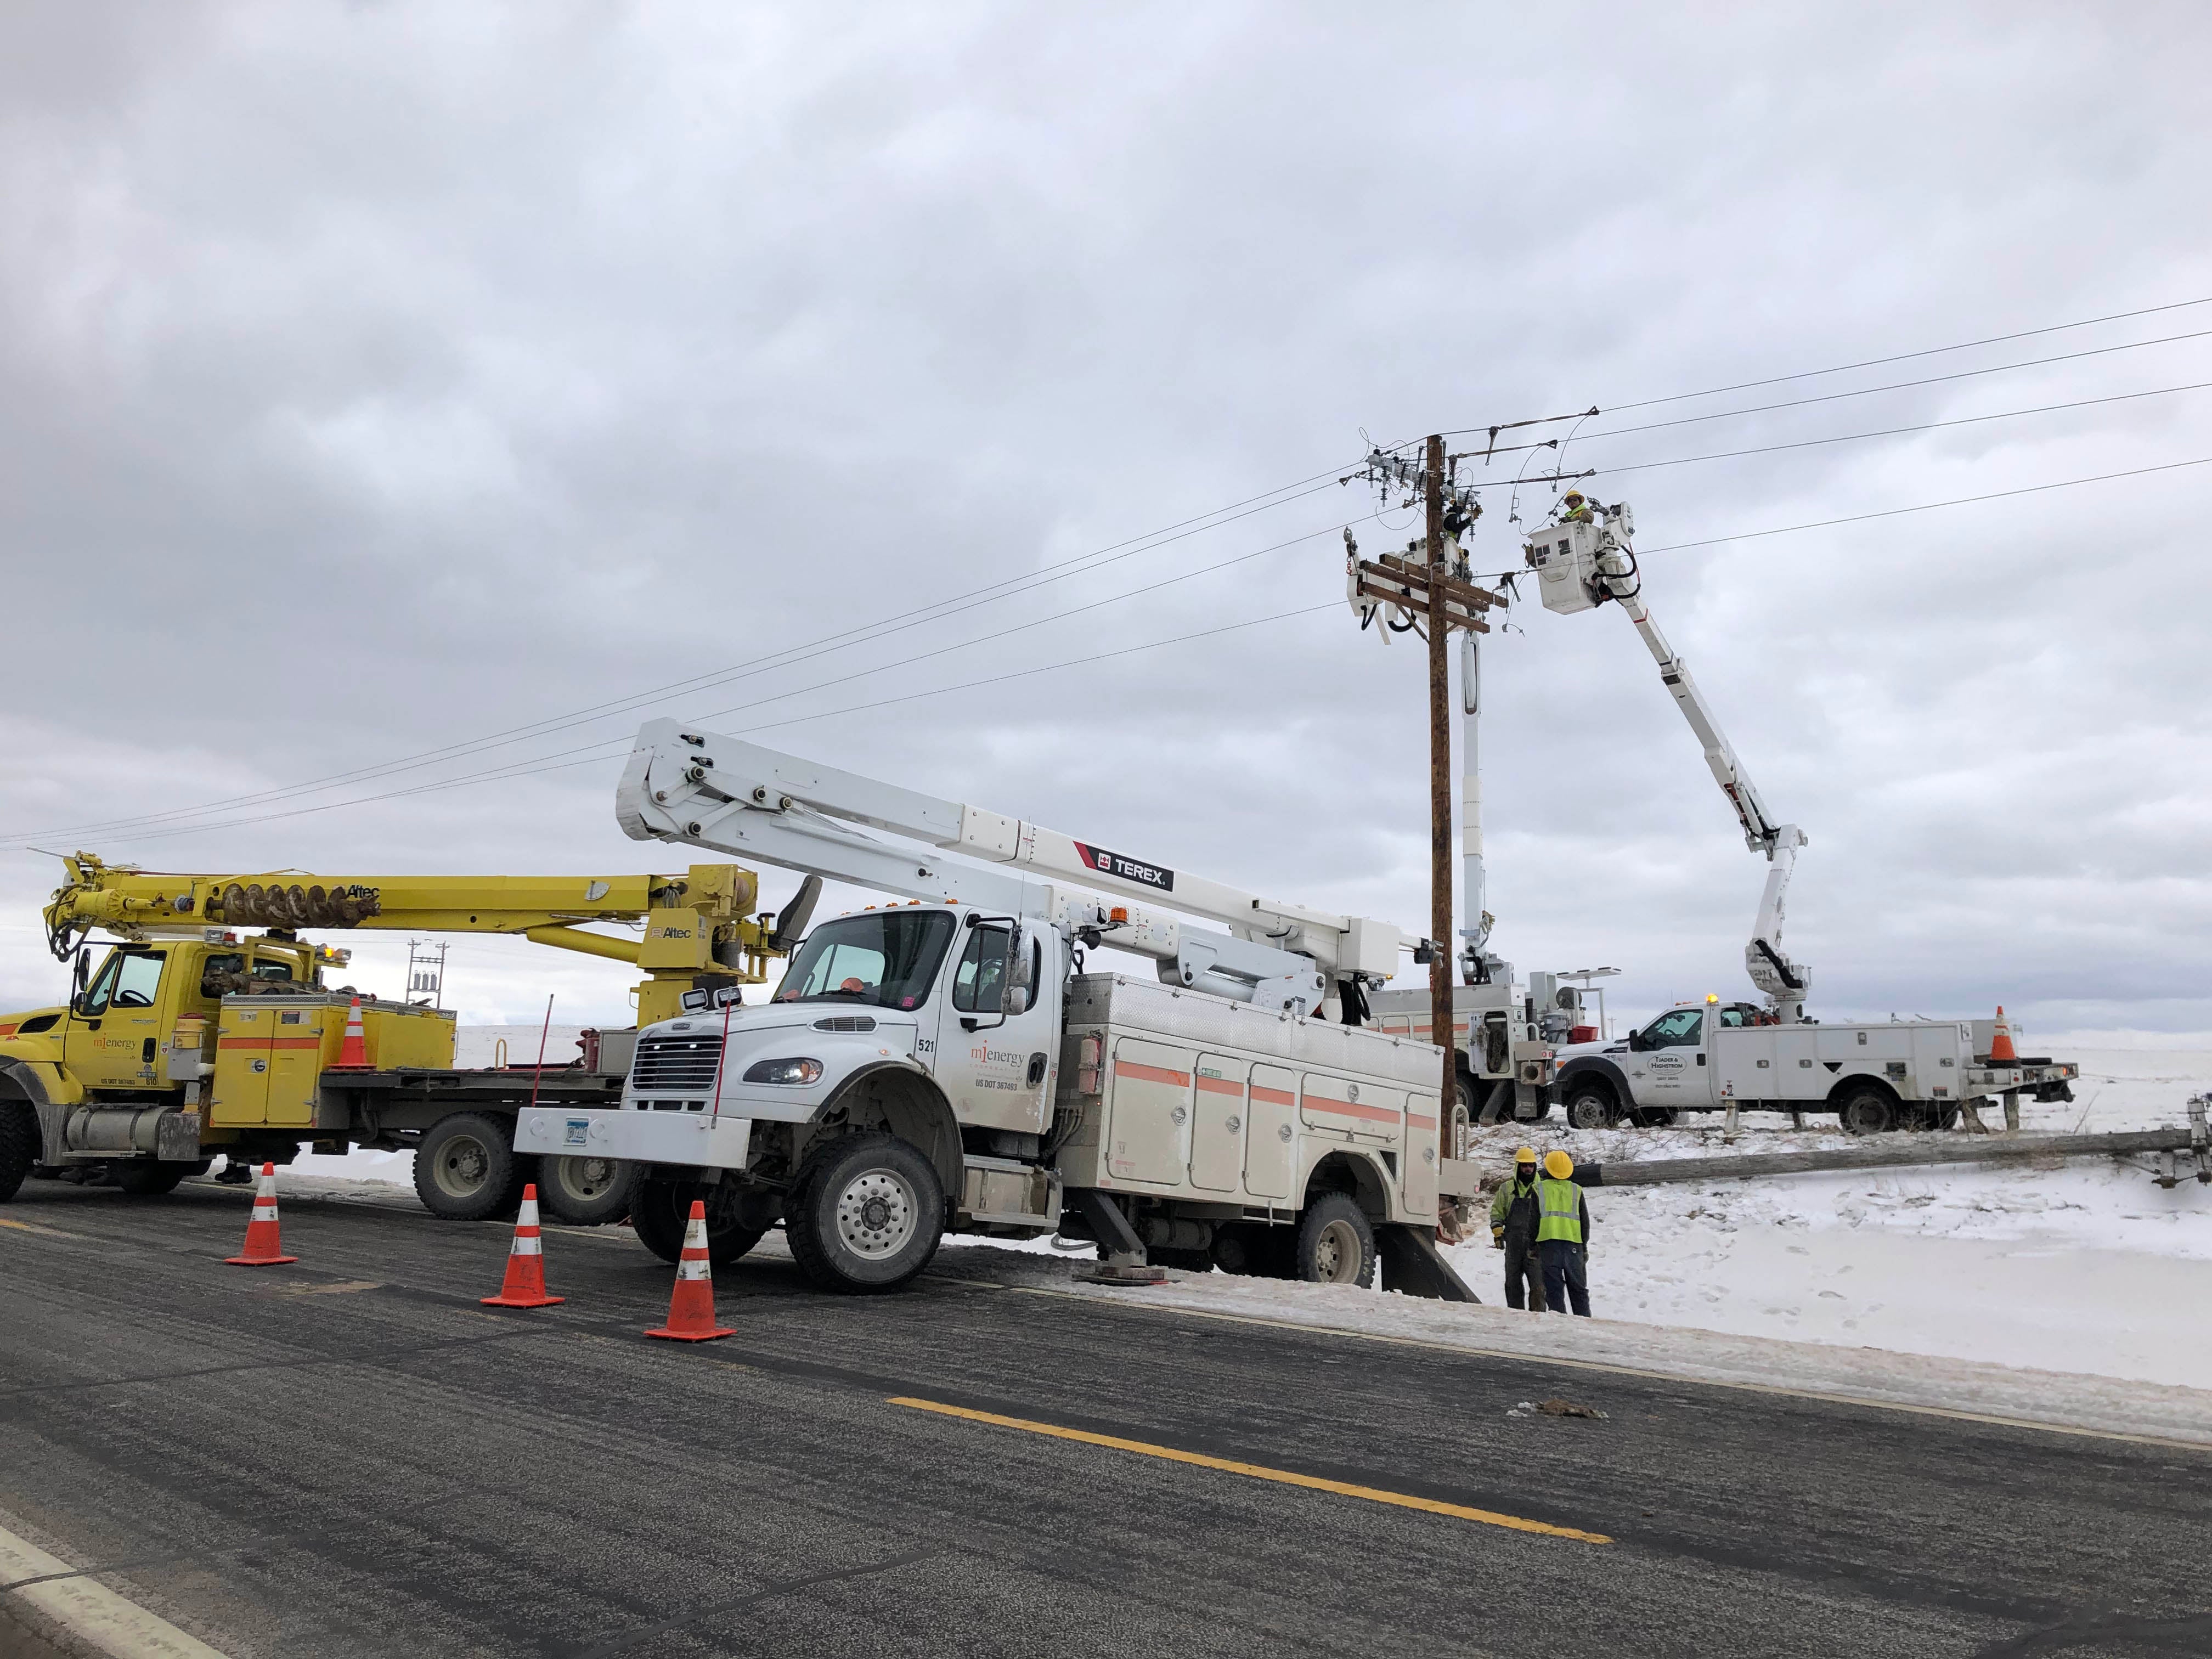 photo showing two bucket trucks fixing power line